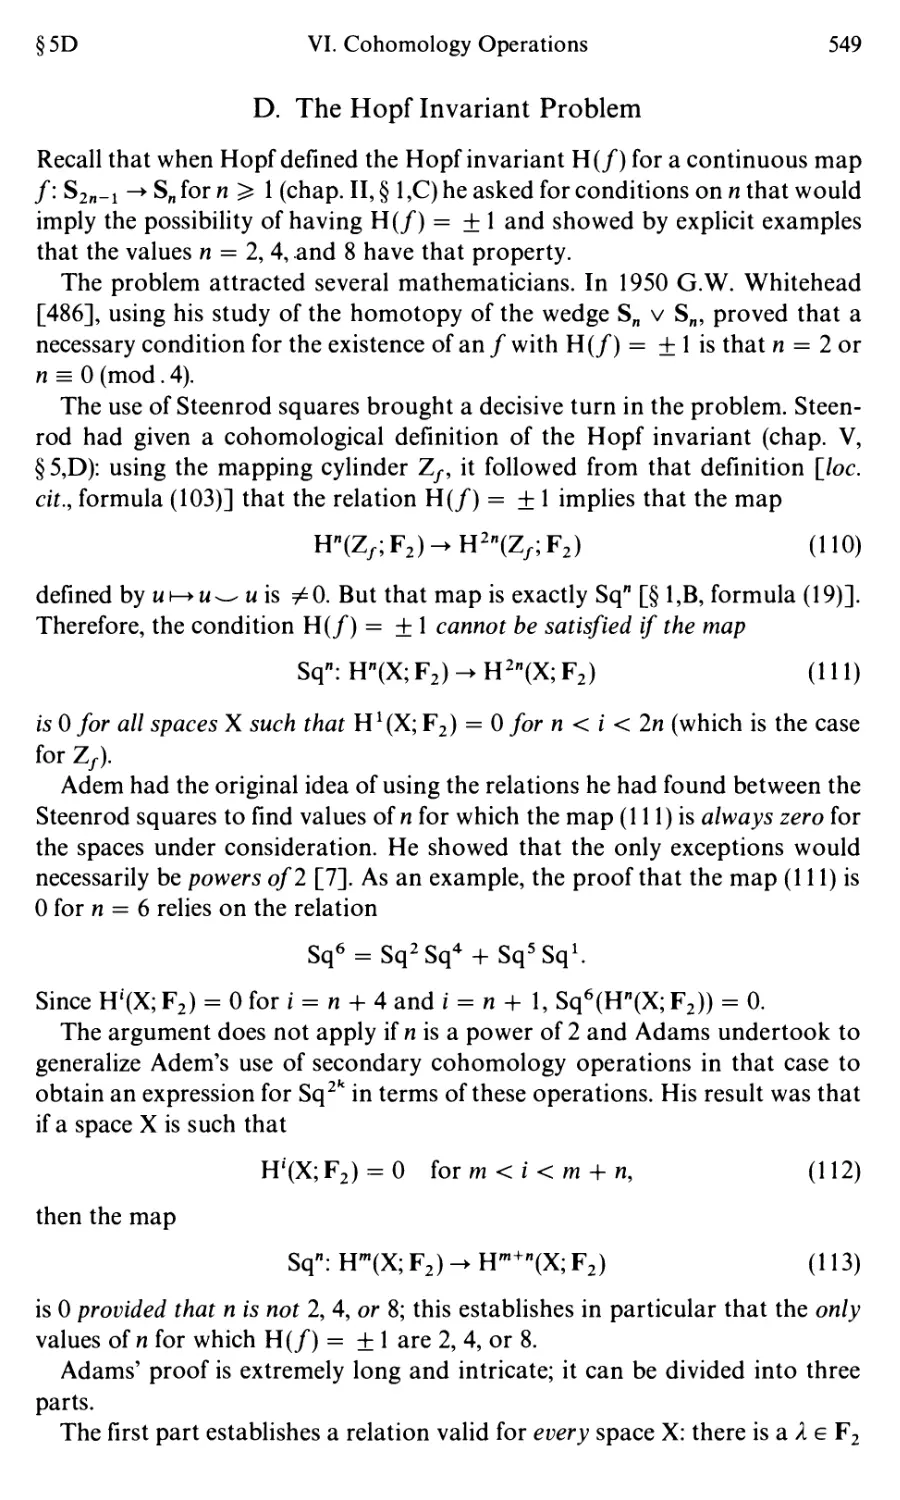 D. The Hopf Invariant Problem